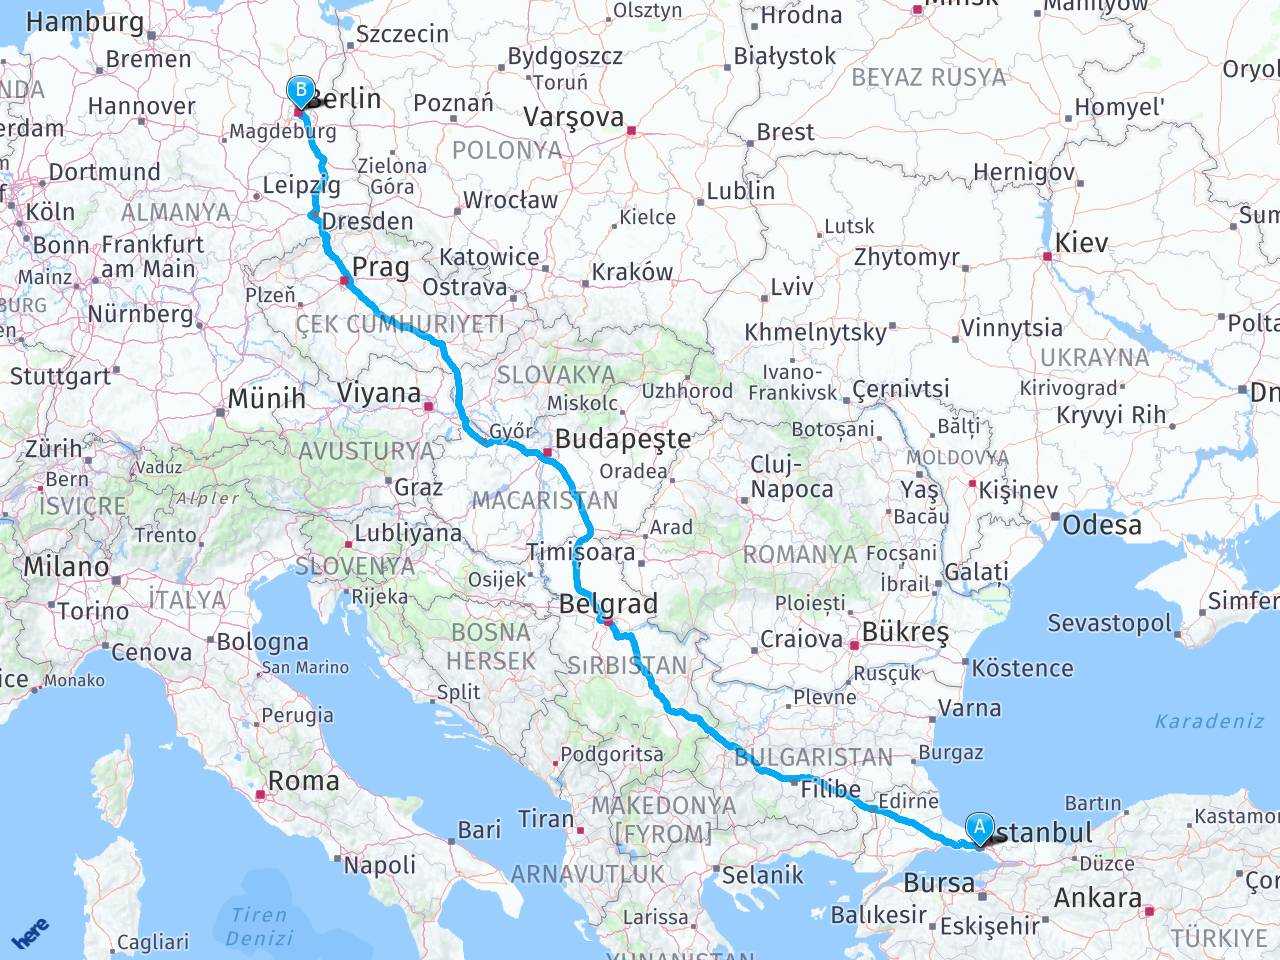 istanbul almanya berlin arasi mesafe istanbul almanya berlin yol haritasi istanbul almanya berlin kac saat kac km